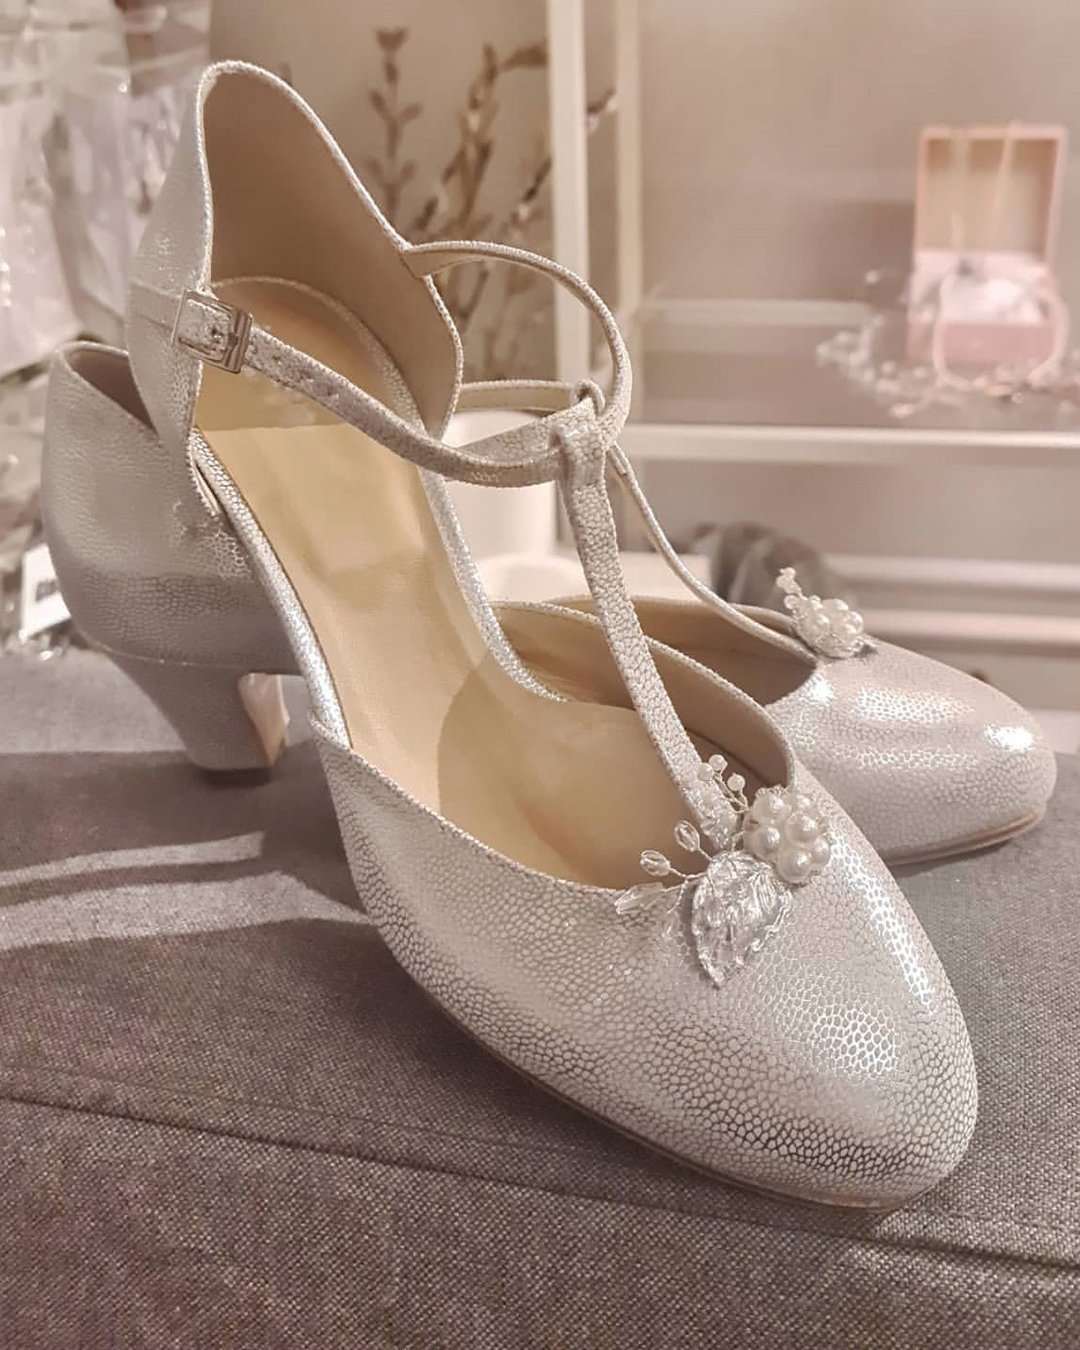 silver wedding shoes vintage style shoolalasalon